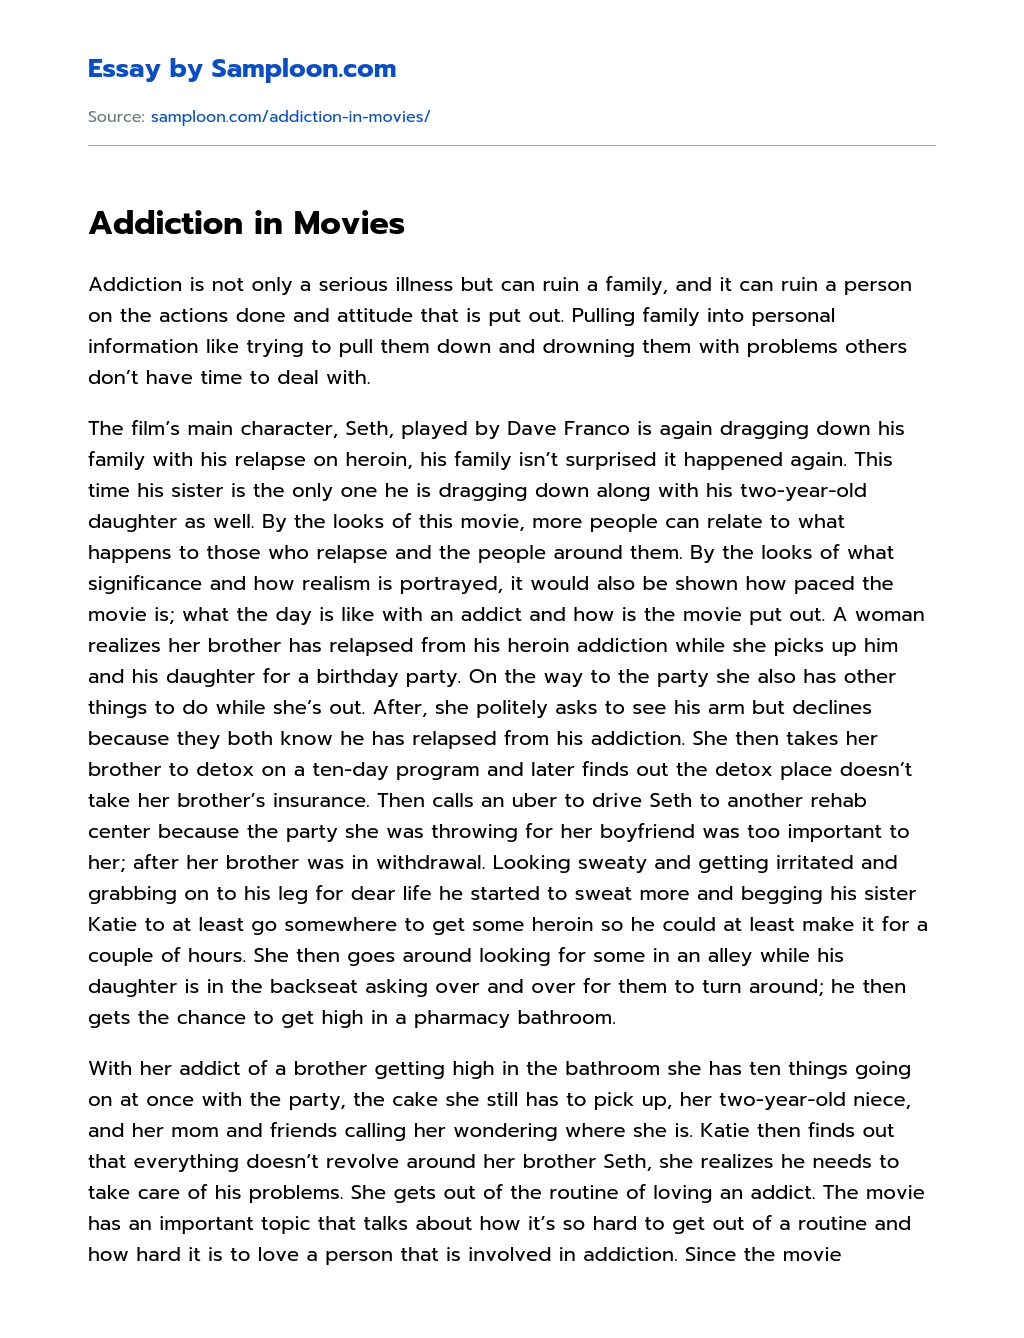 Addiction in Movies essay